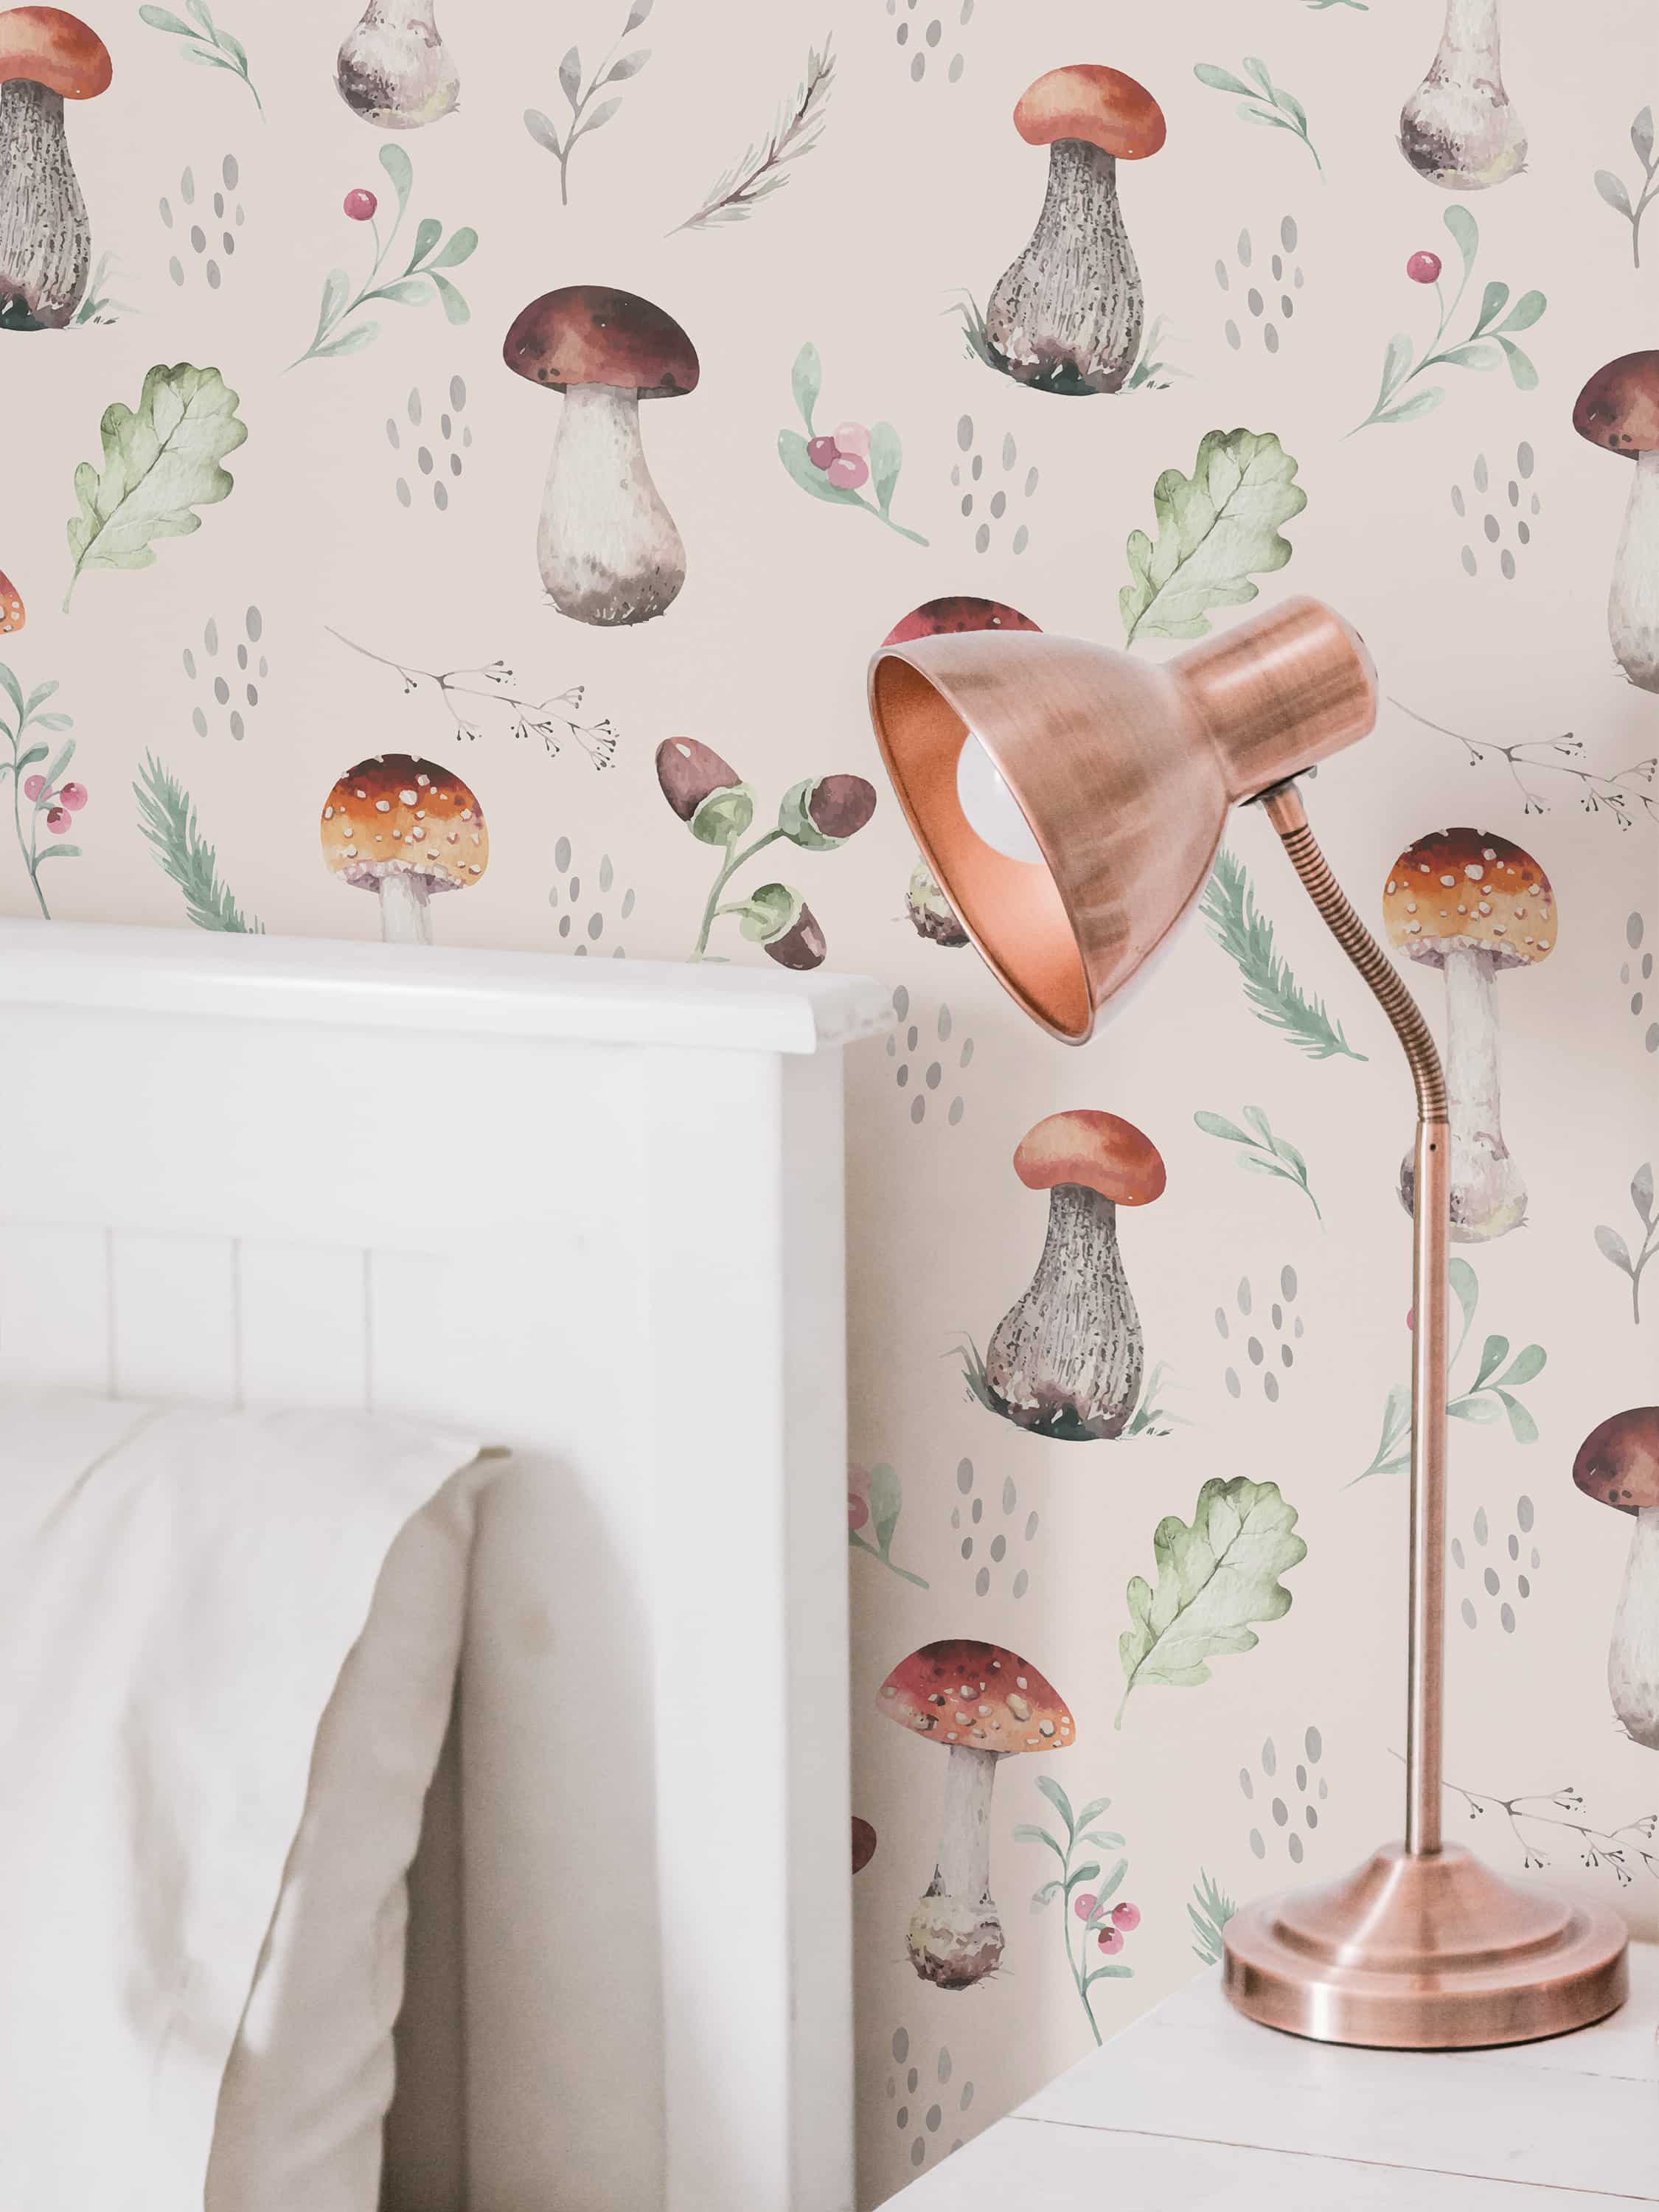 Top 999+ Cute Mushroom Wallpaper Full HD, 4K✓Free to Use